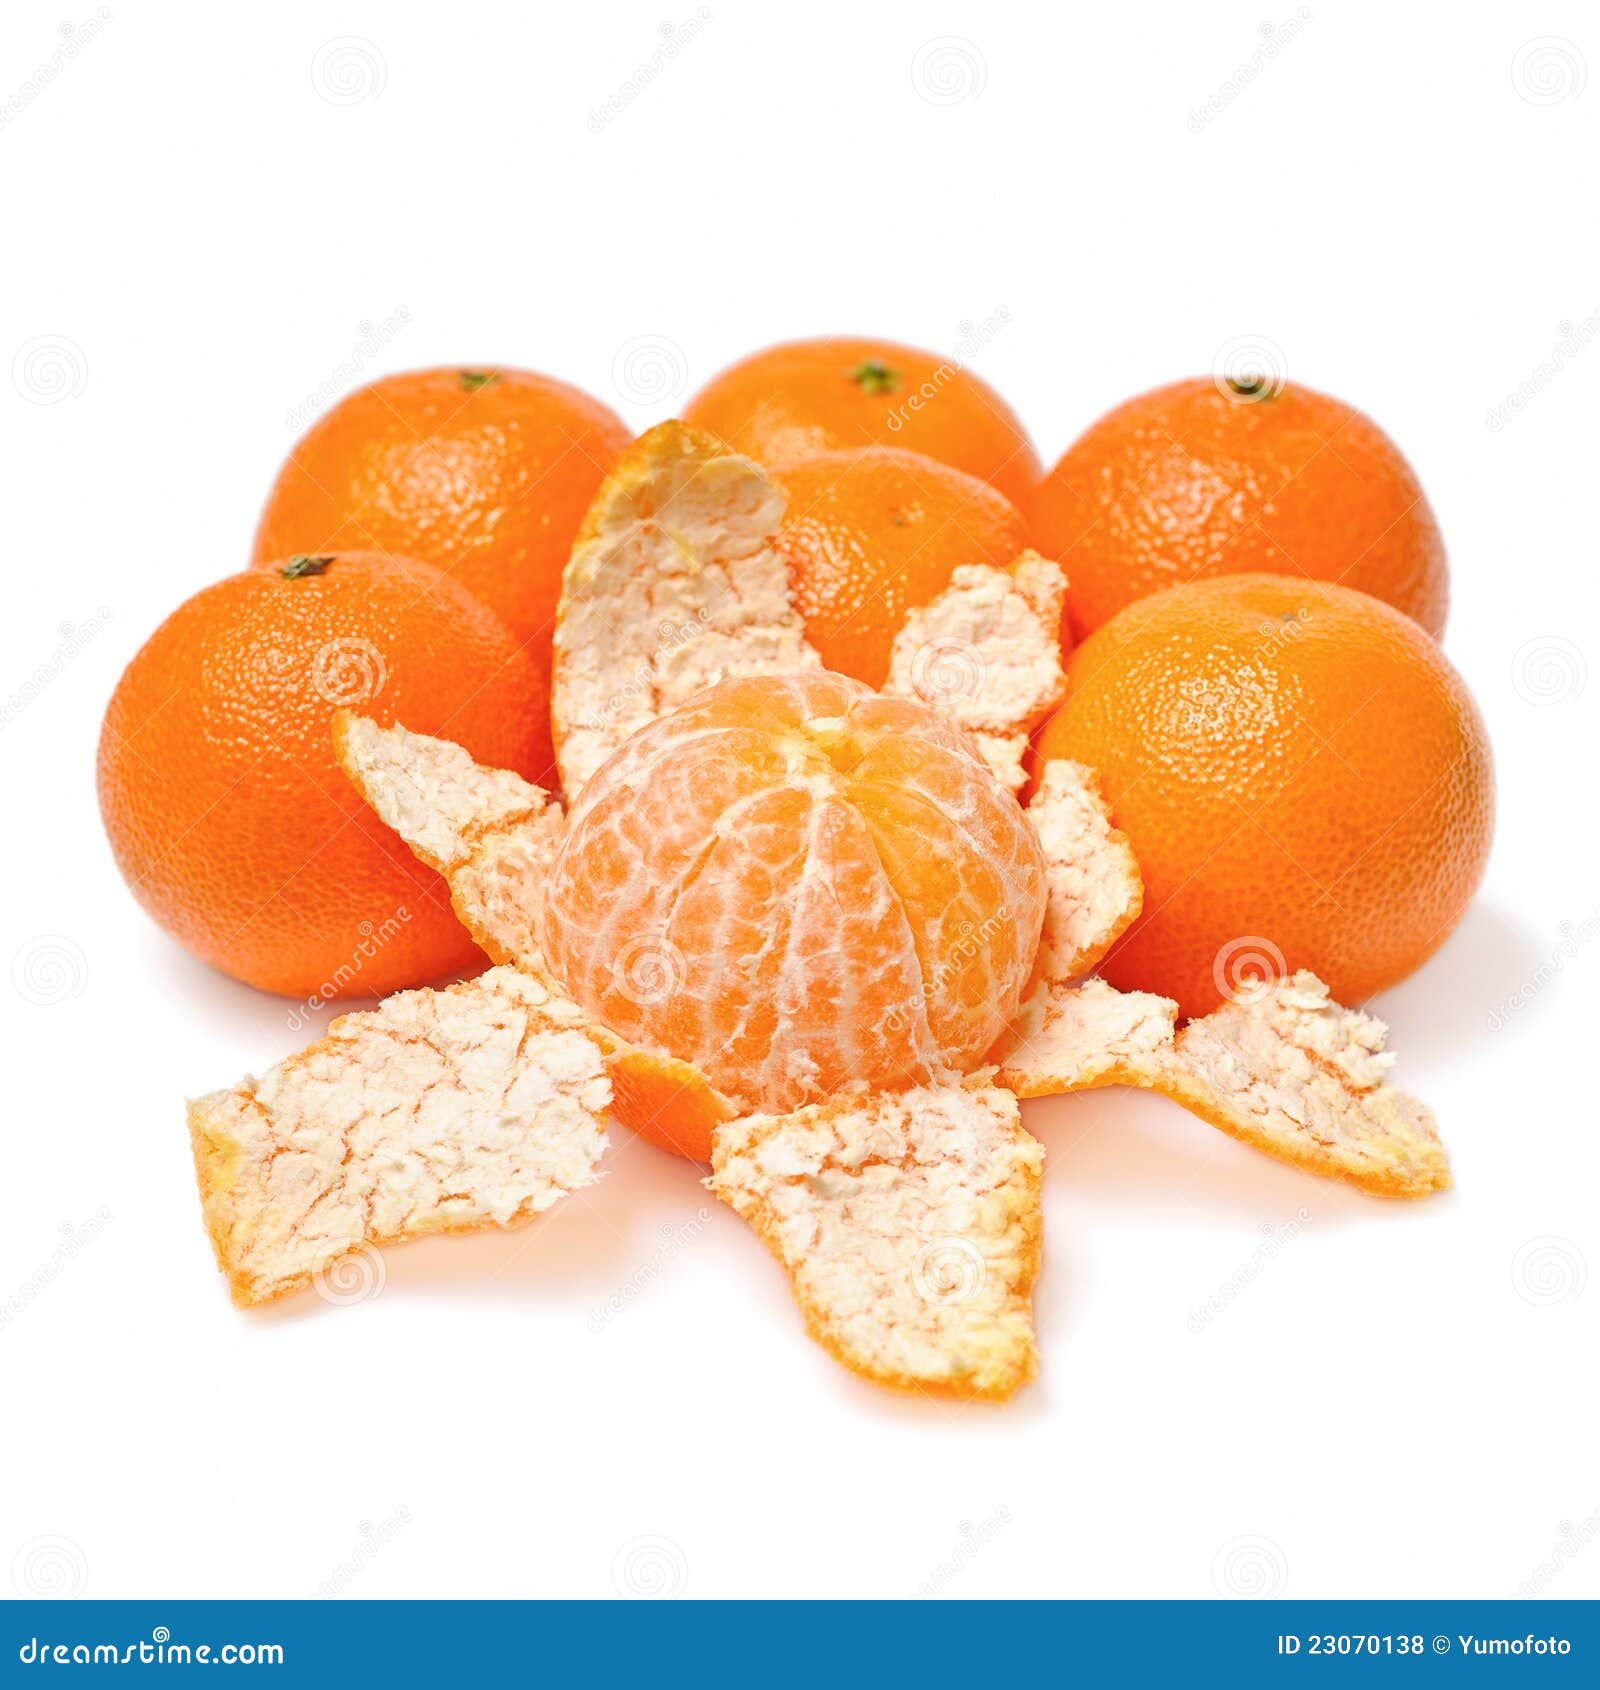 purified mandarin peel fruits